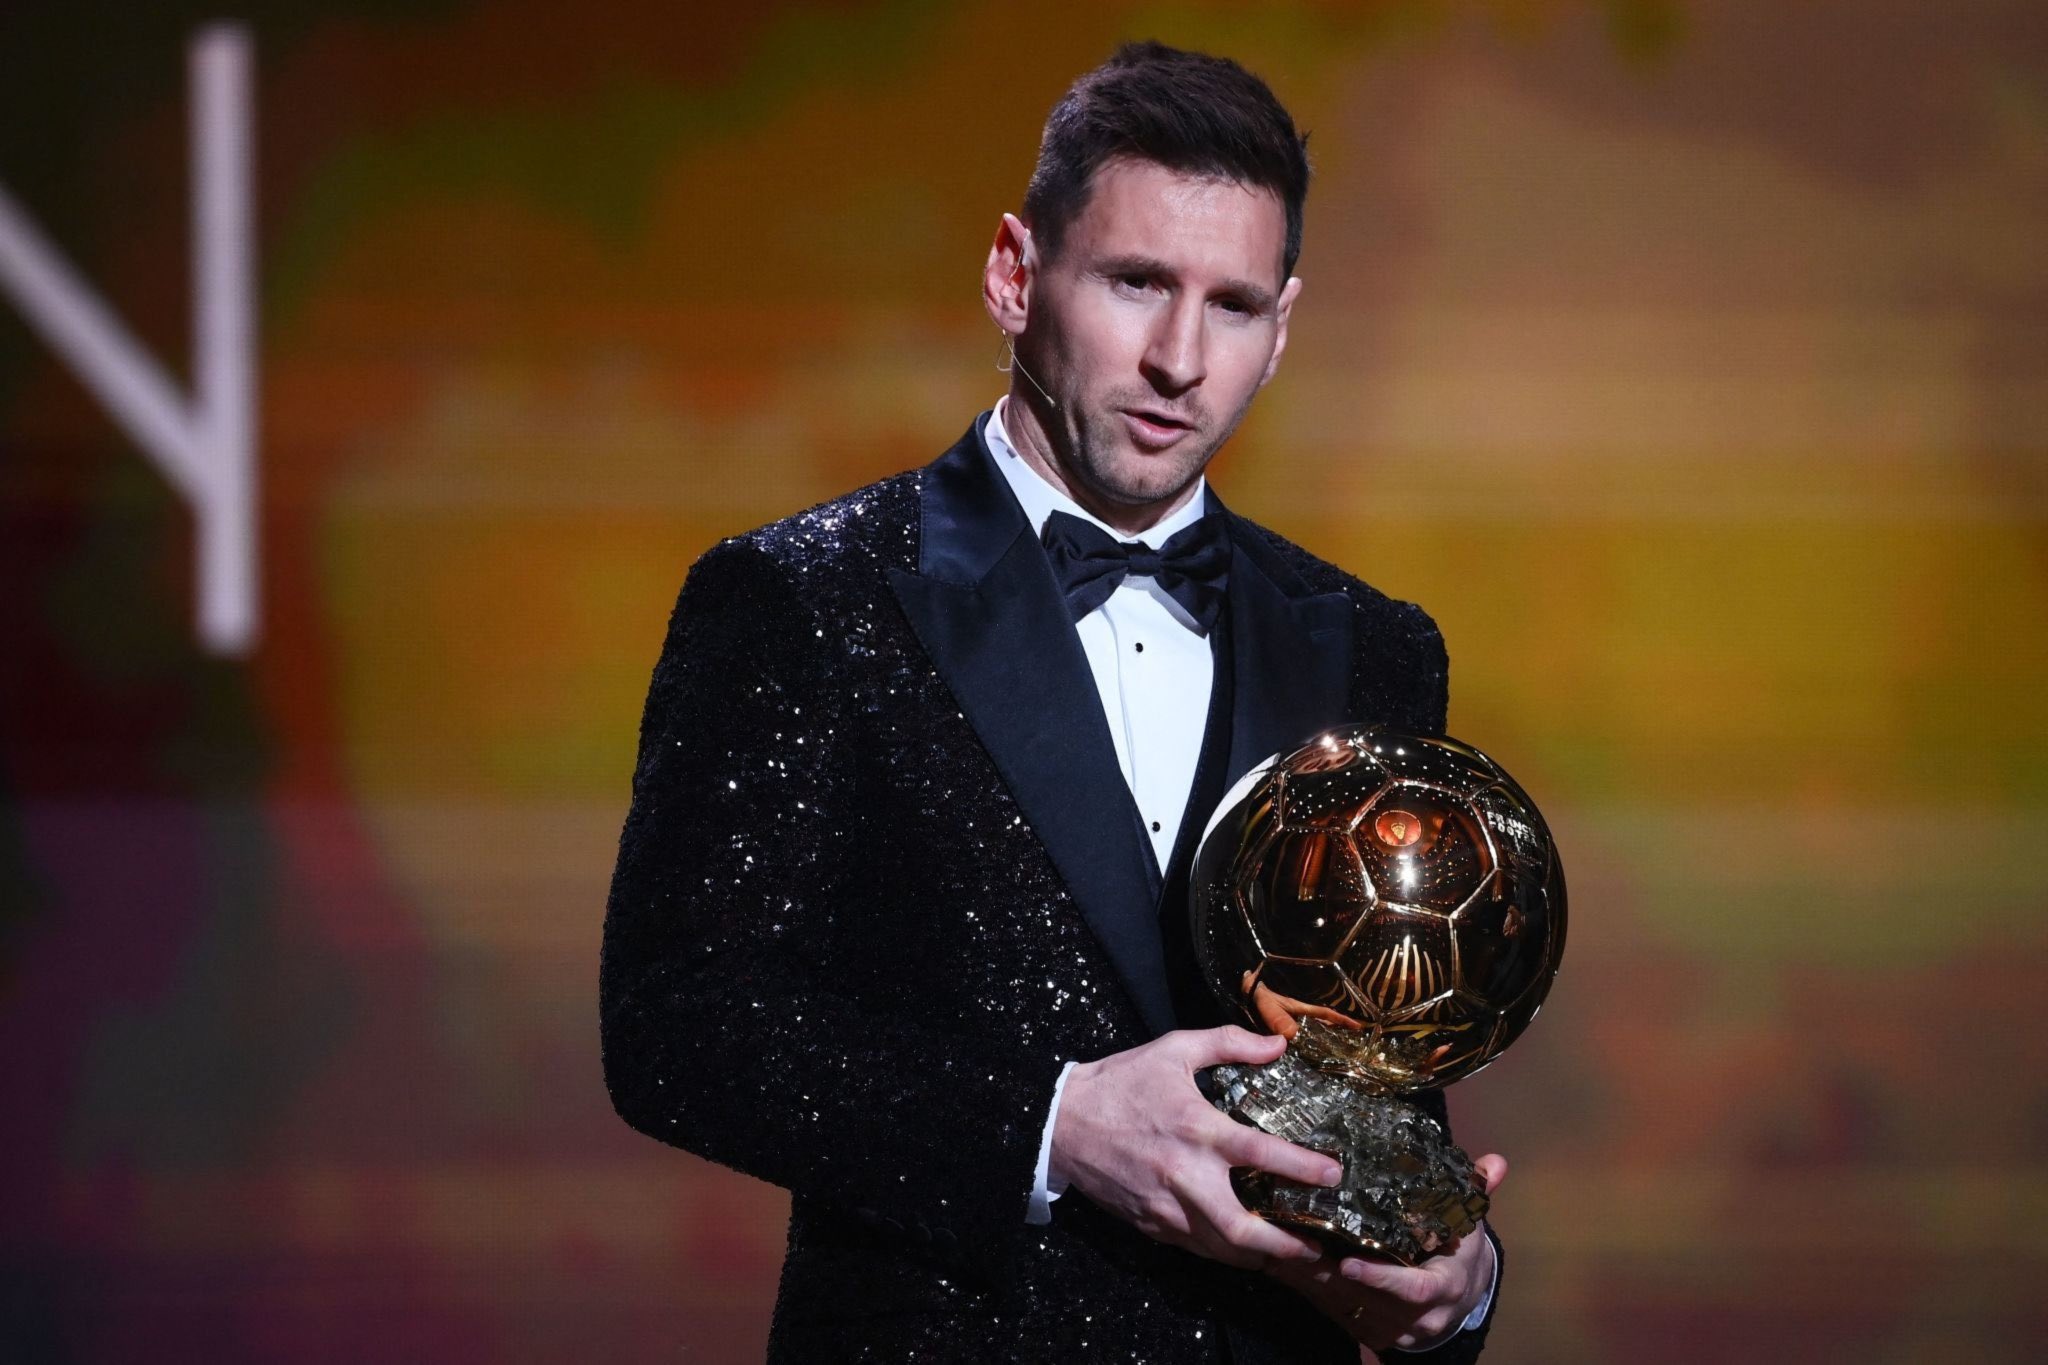 Ballon d'Or shortlist: Lionel Messi, Robert Lewandowski, Jorginho